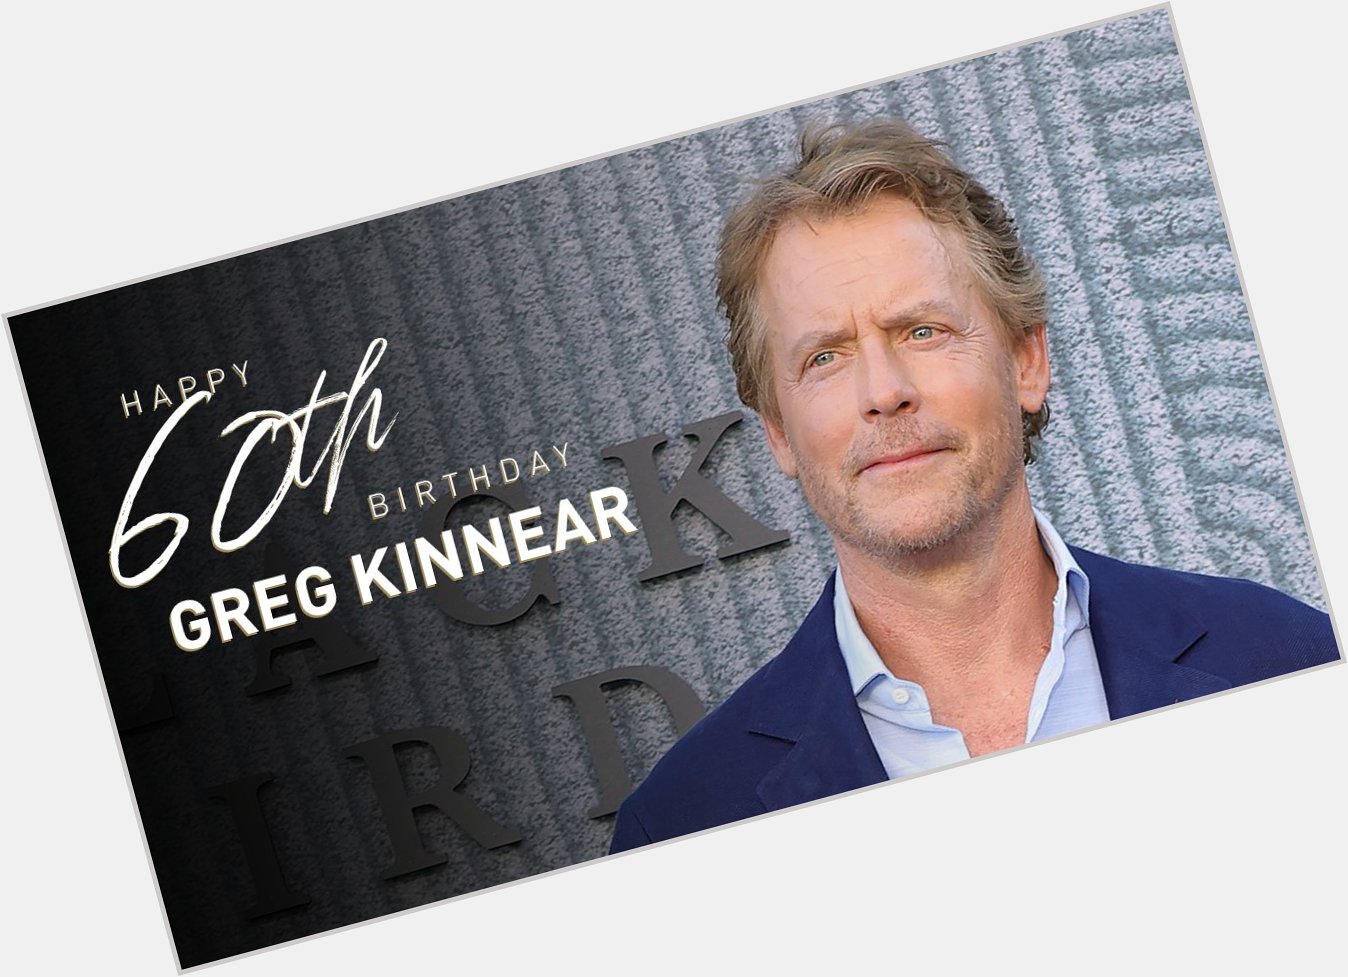 Happy 60th birthday Greg Kinnear!

Read his bio here:  